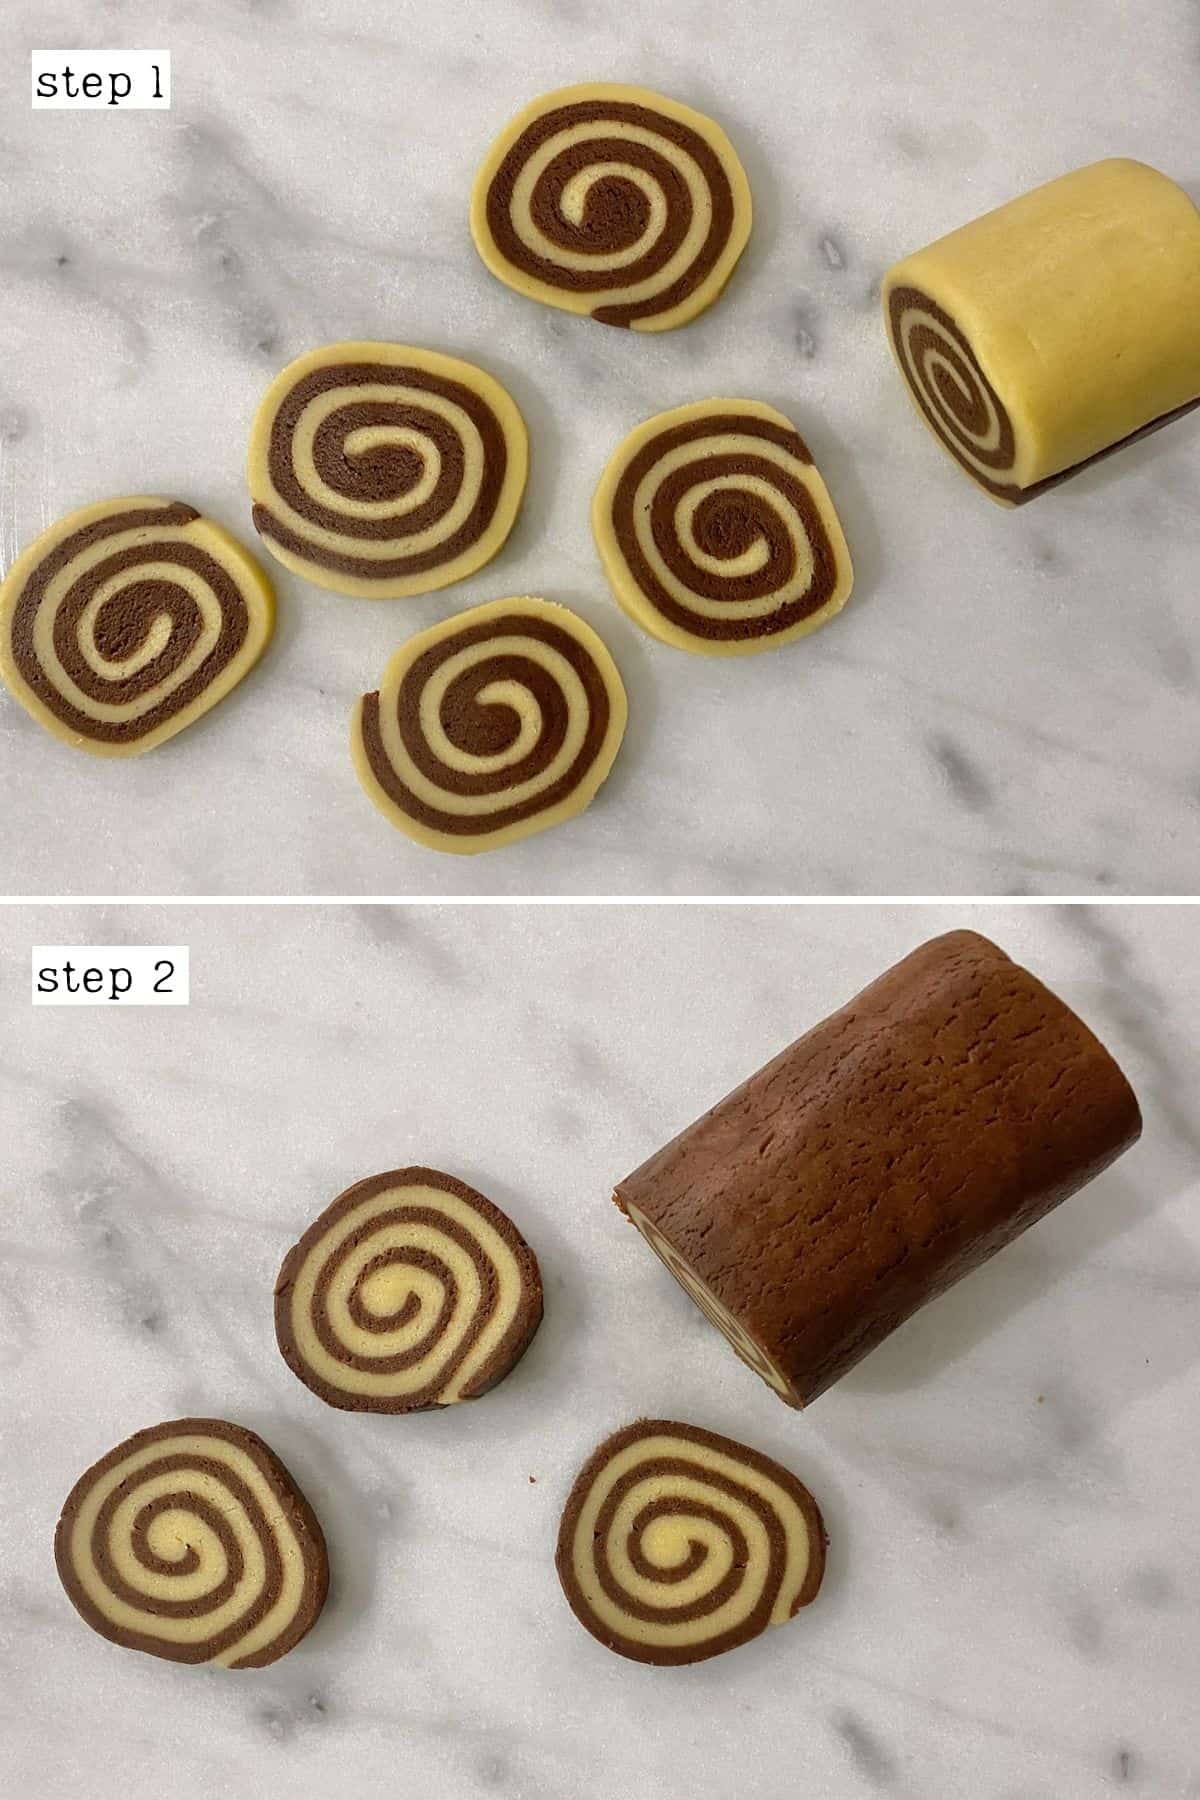 Steps for cutting pinwheel cookies